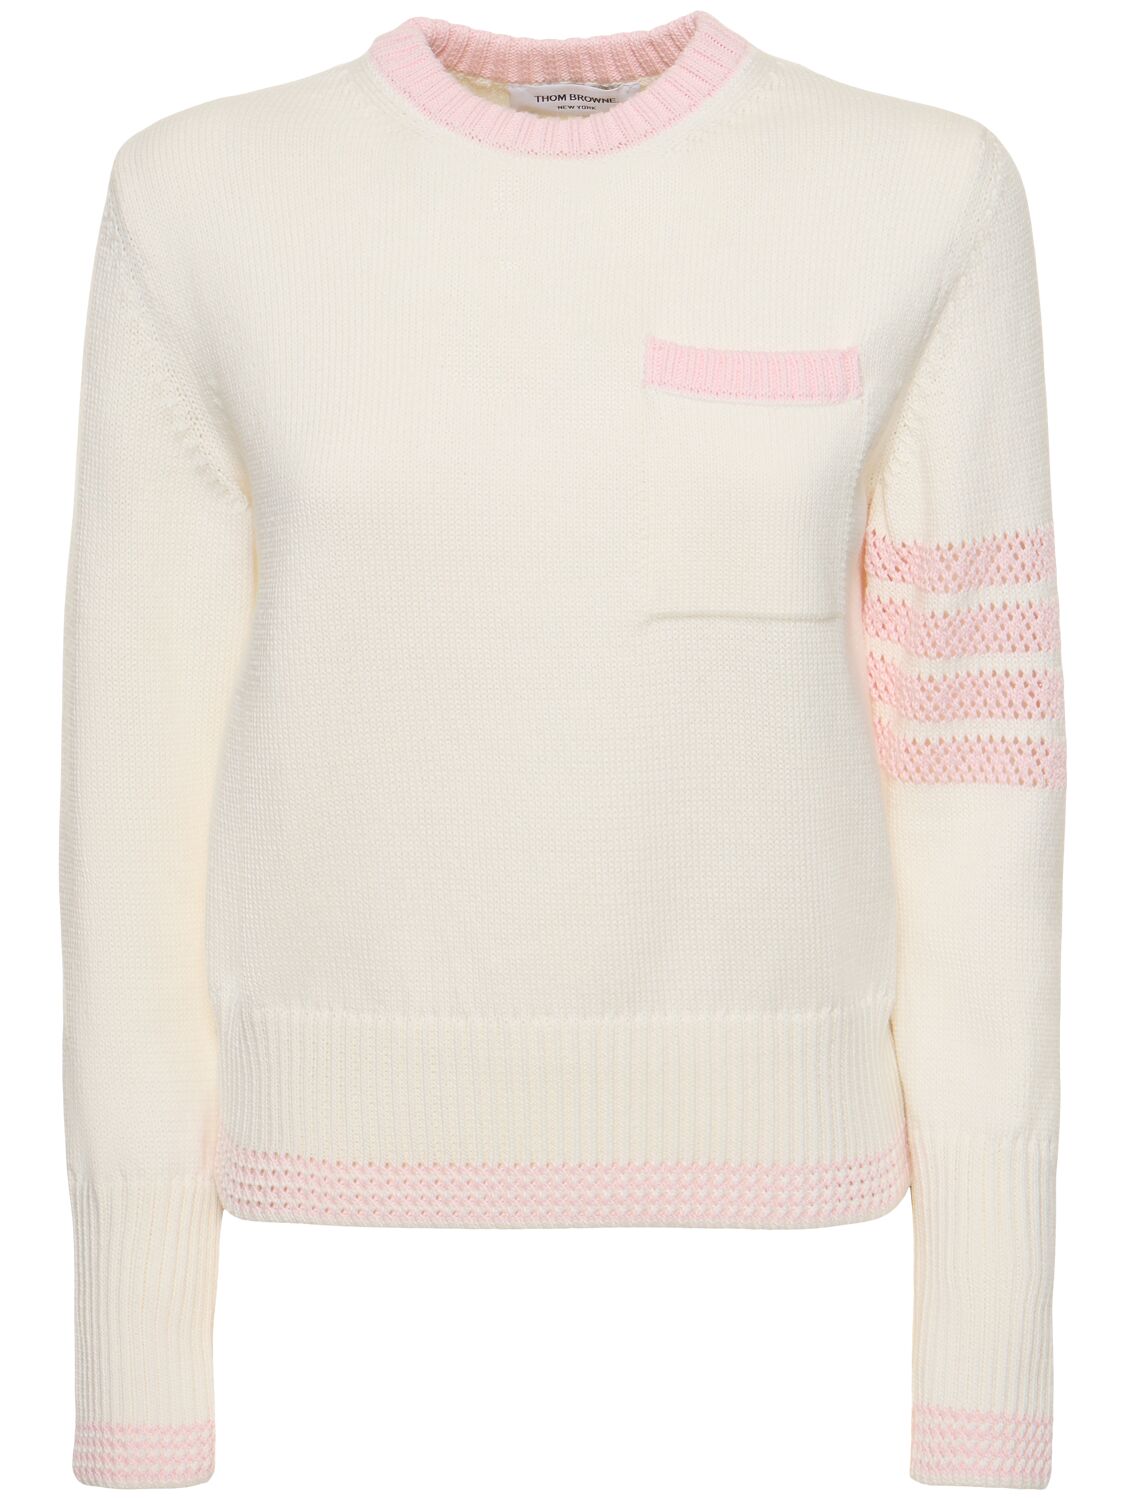 Image of Cotton Knit 4 Stripe Sweater W/ Pocket